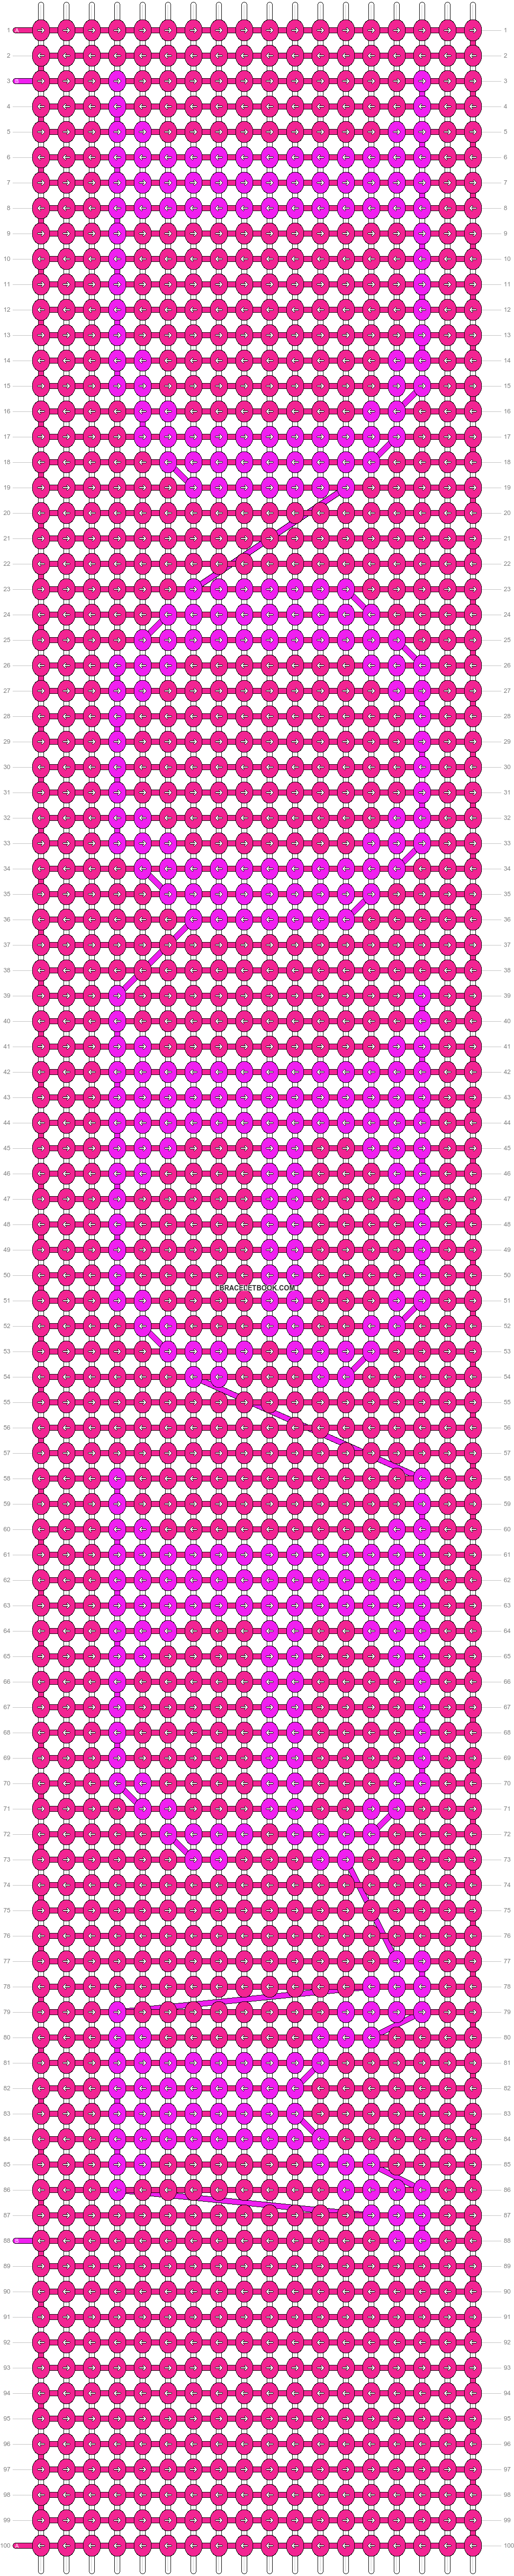 Alpha pattern #8623 variation #48001 pattern